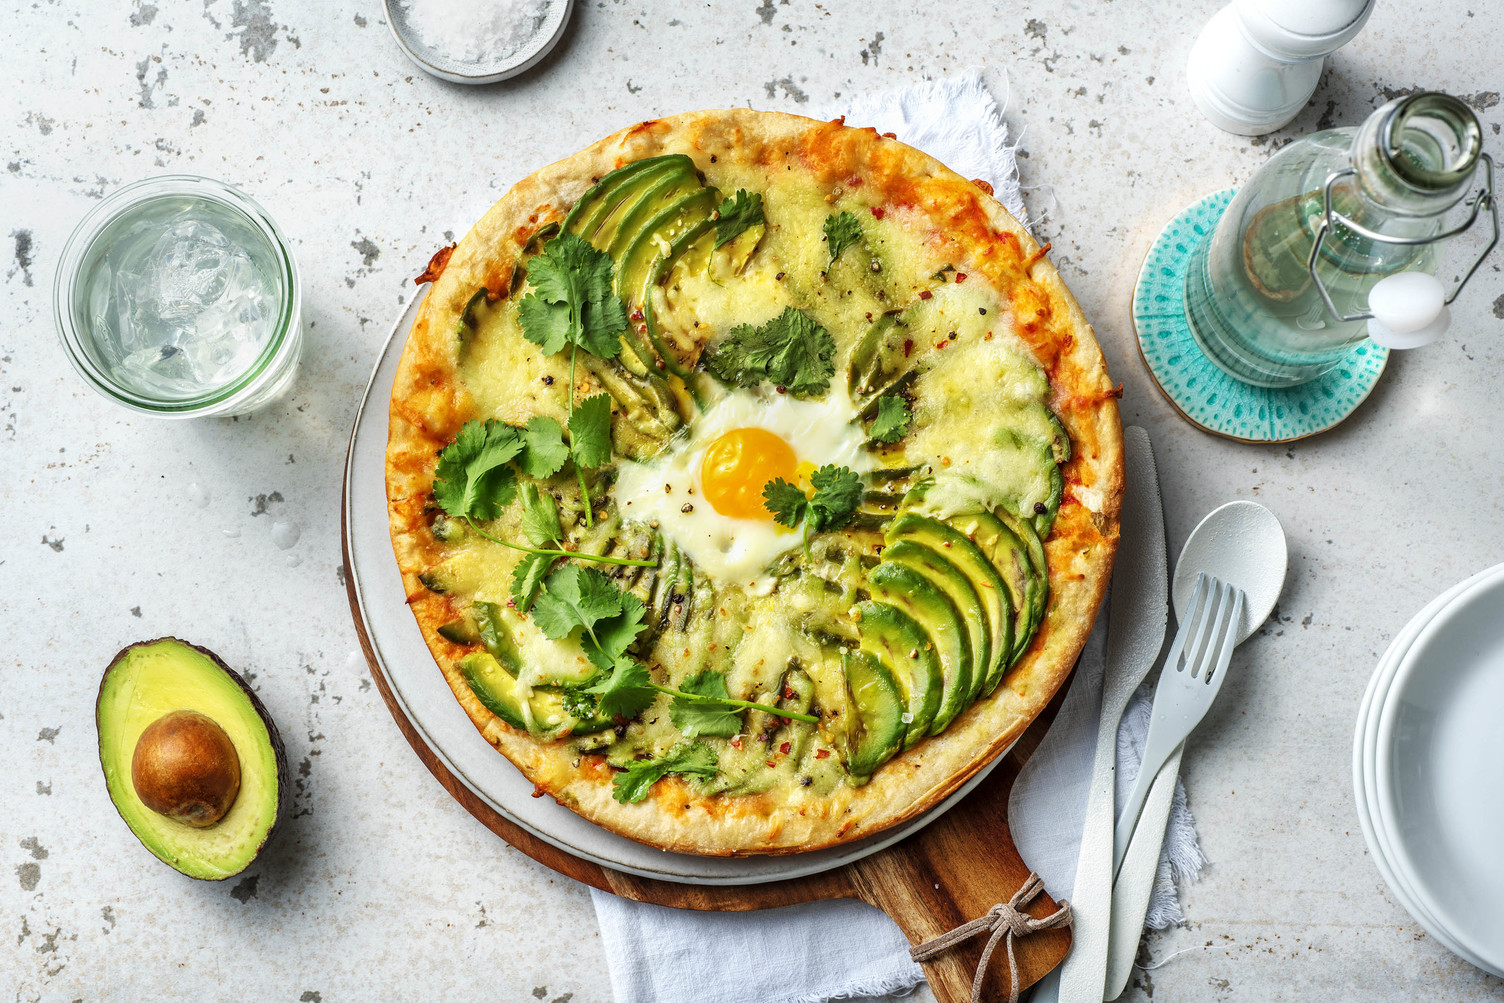 hellofresh-creative avocado recipes -pizza-avocado